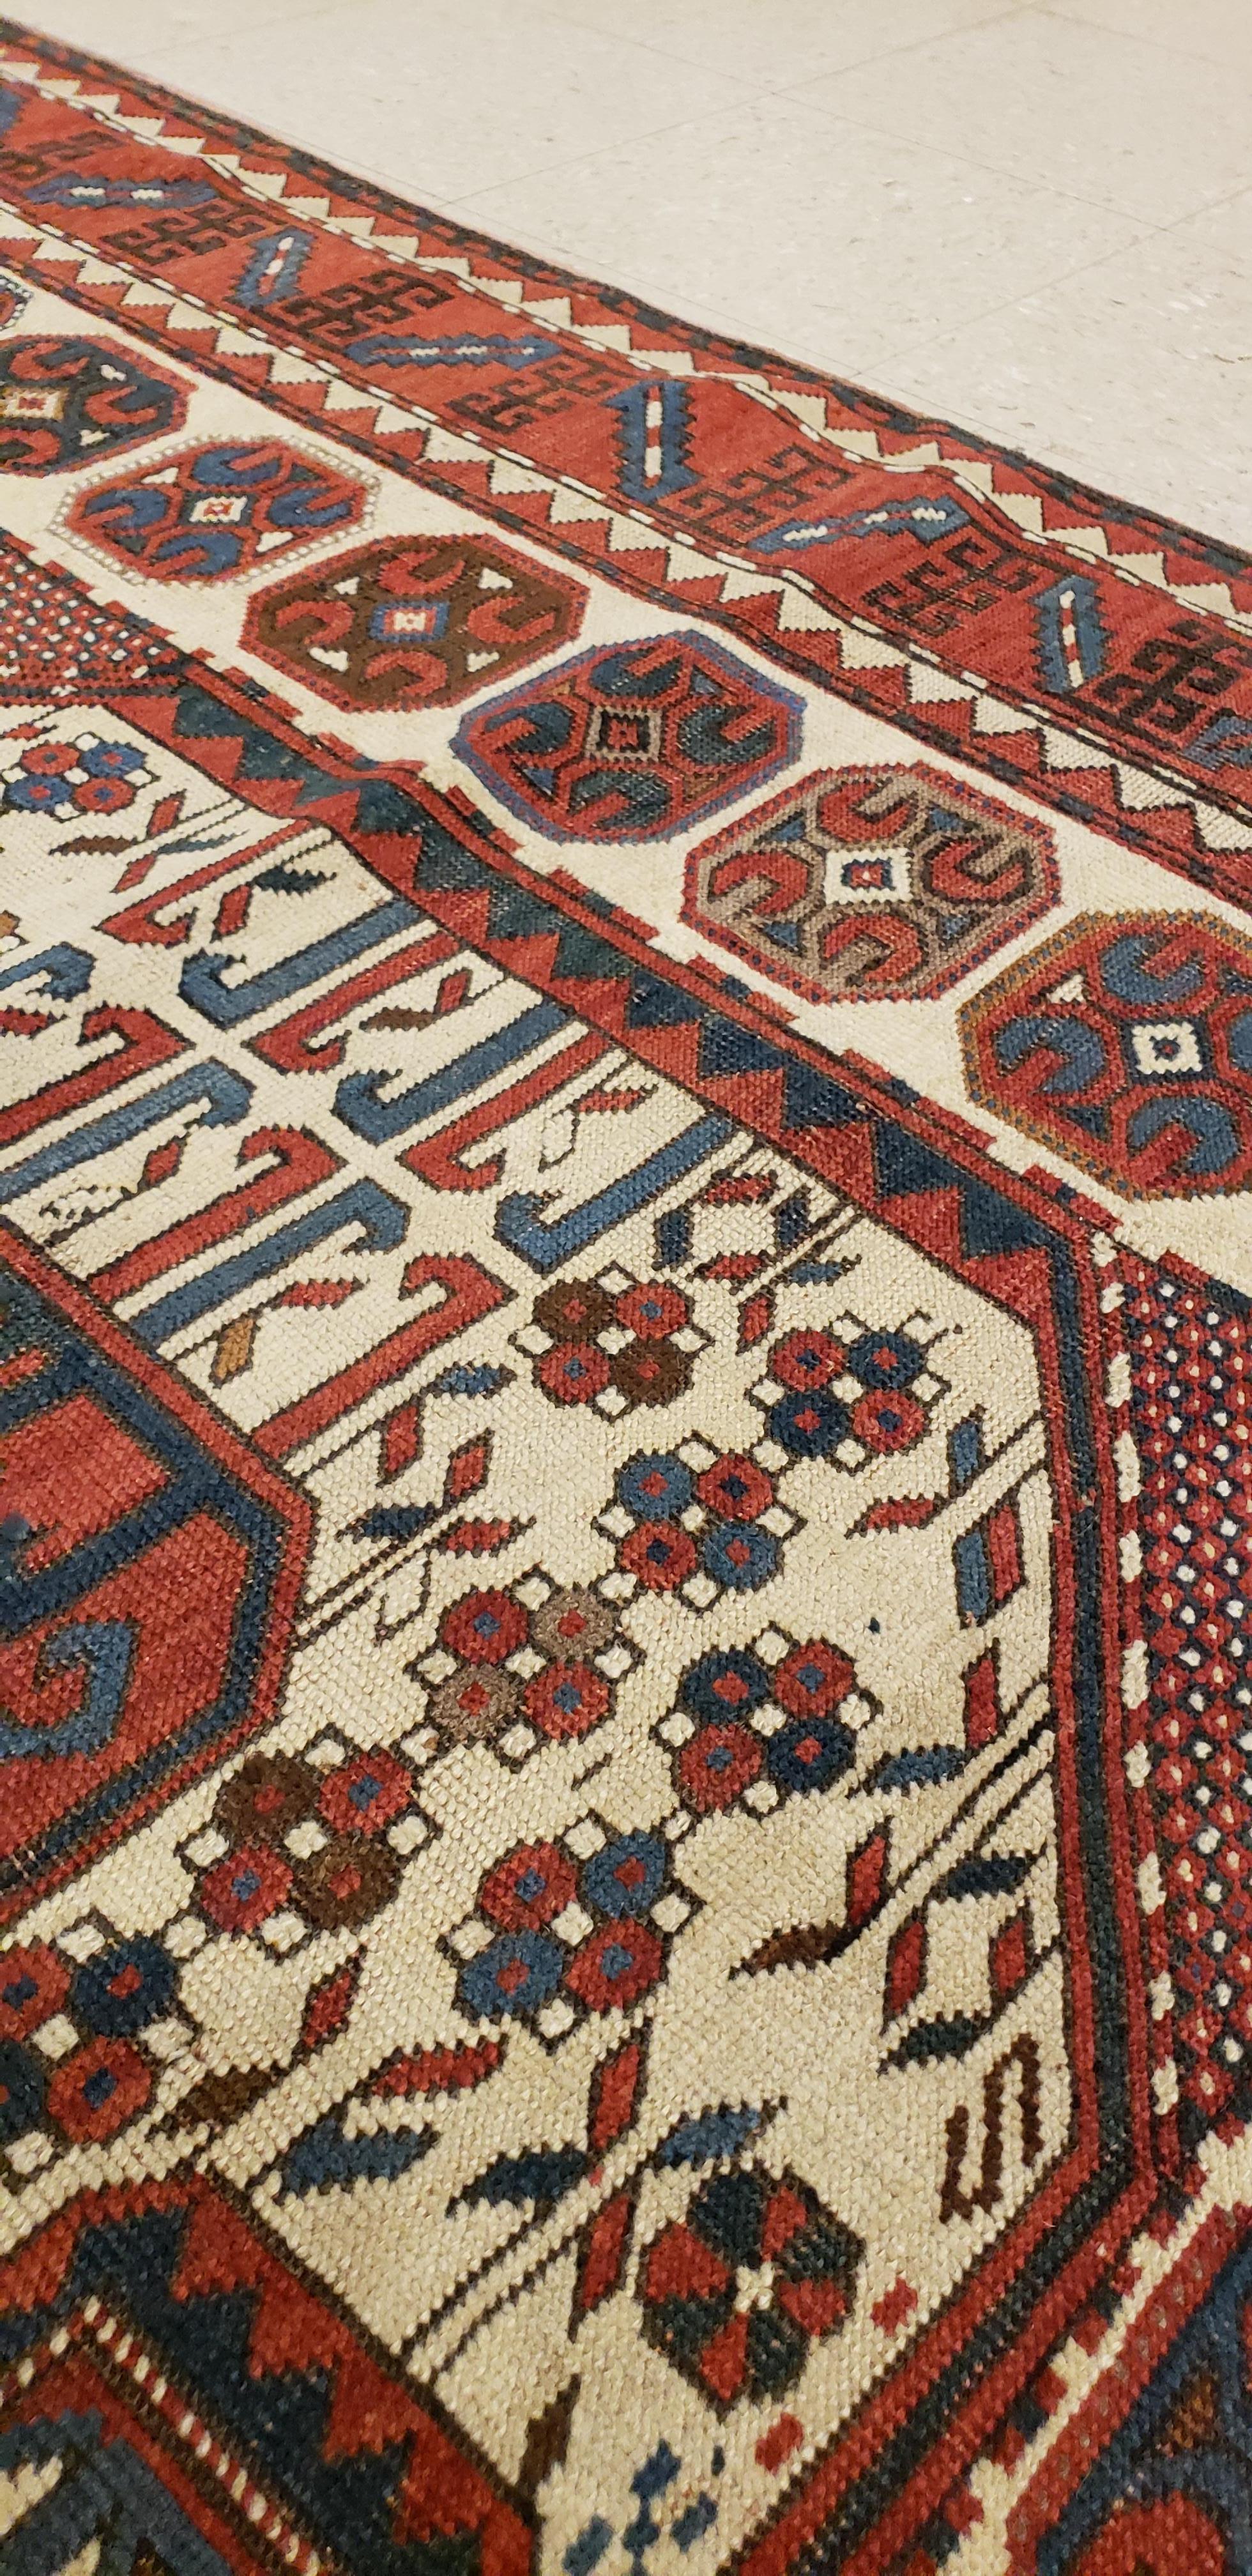 Antique Karachov Kazak Carpet, Handmade Wool, Rust, Ivory, Blue and Geometric In Good Condition For Sale In Port Washington, NY